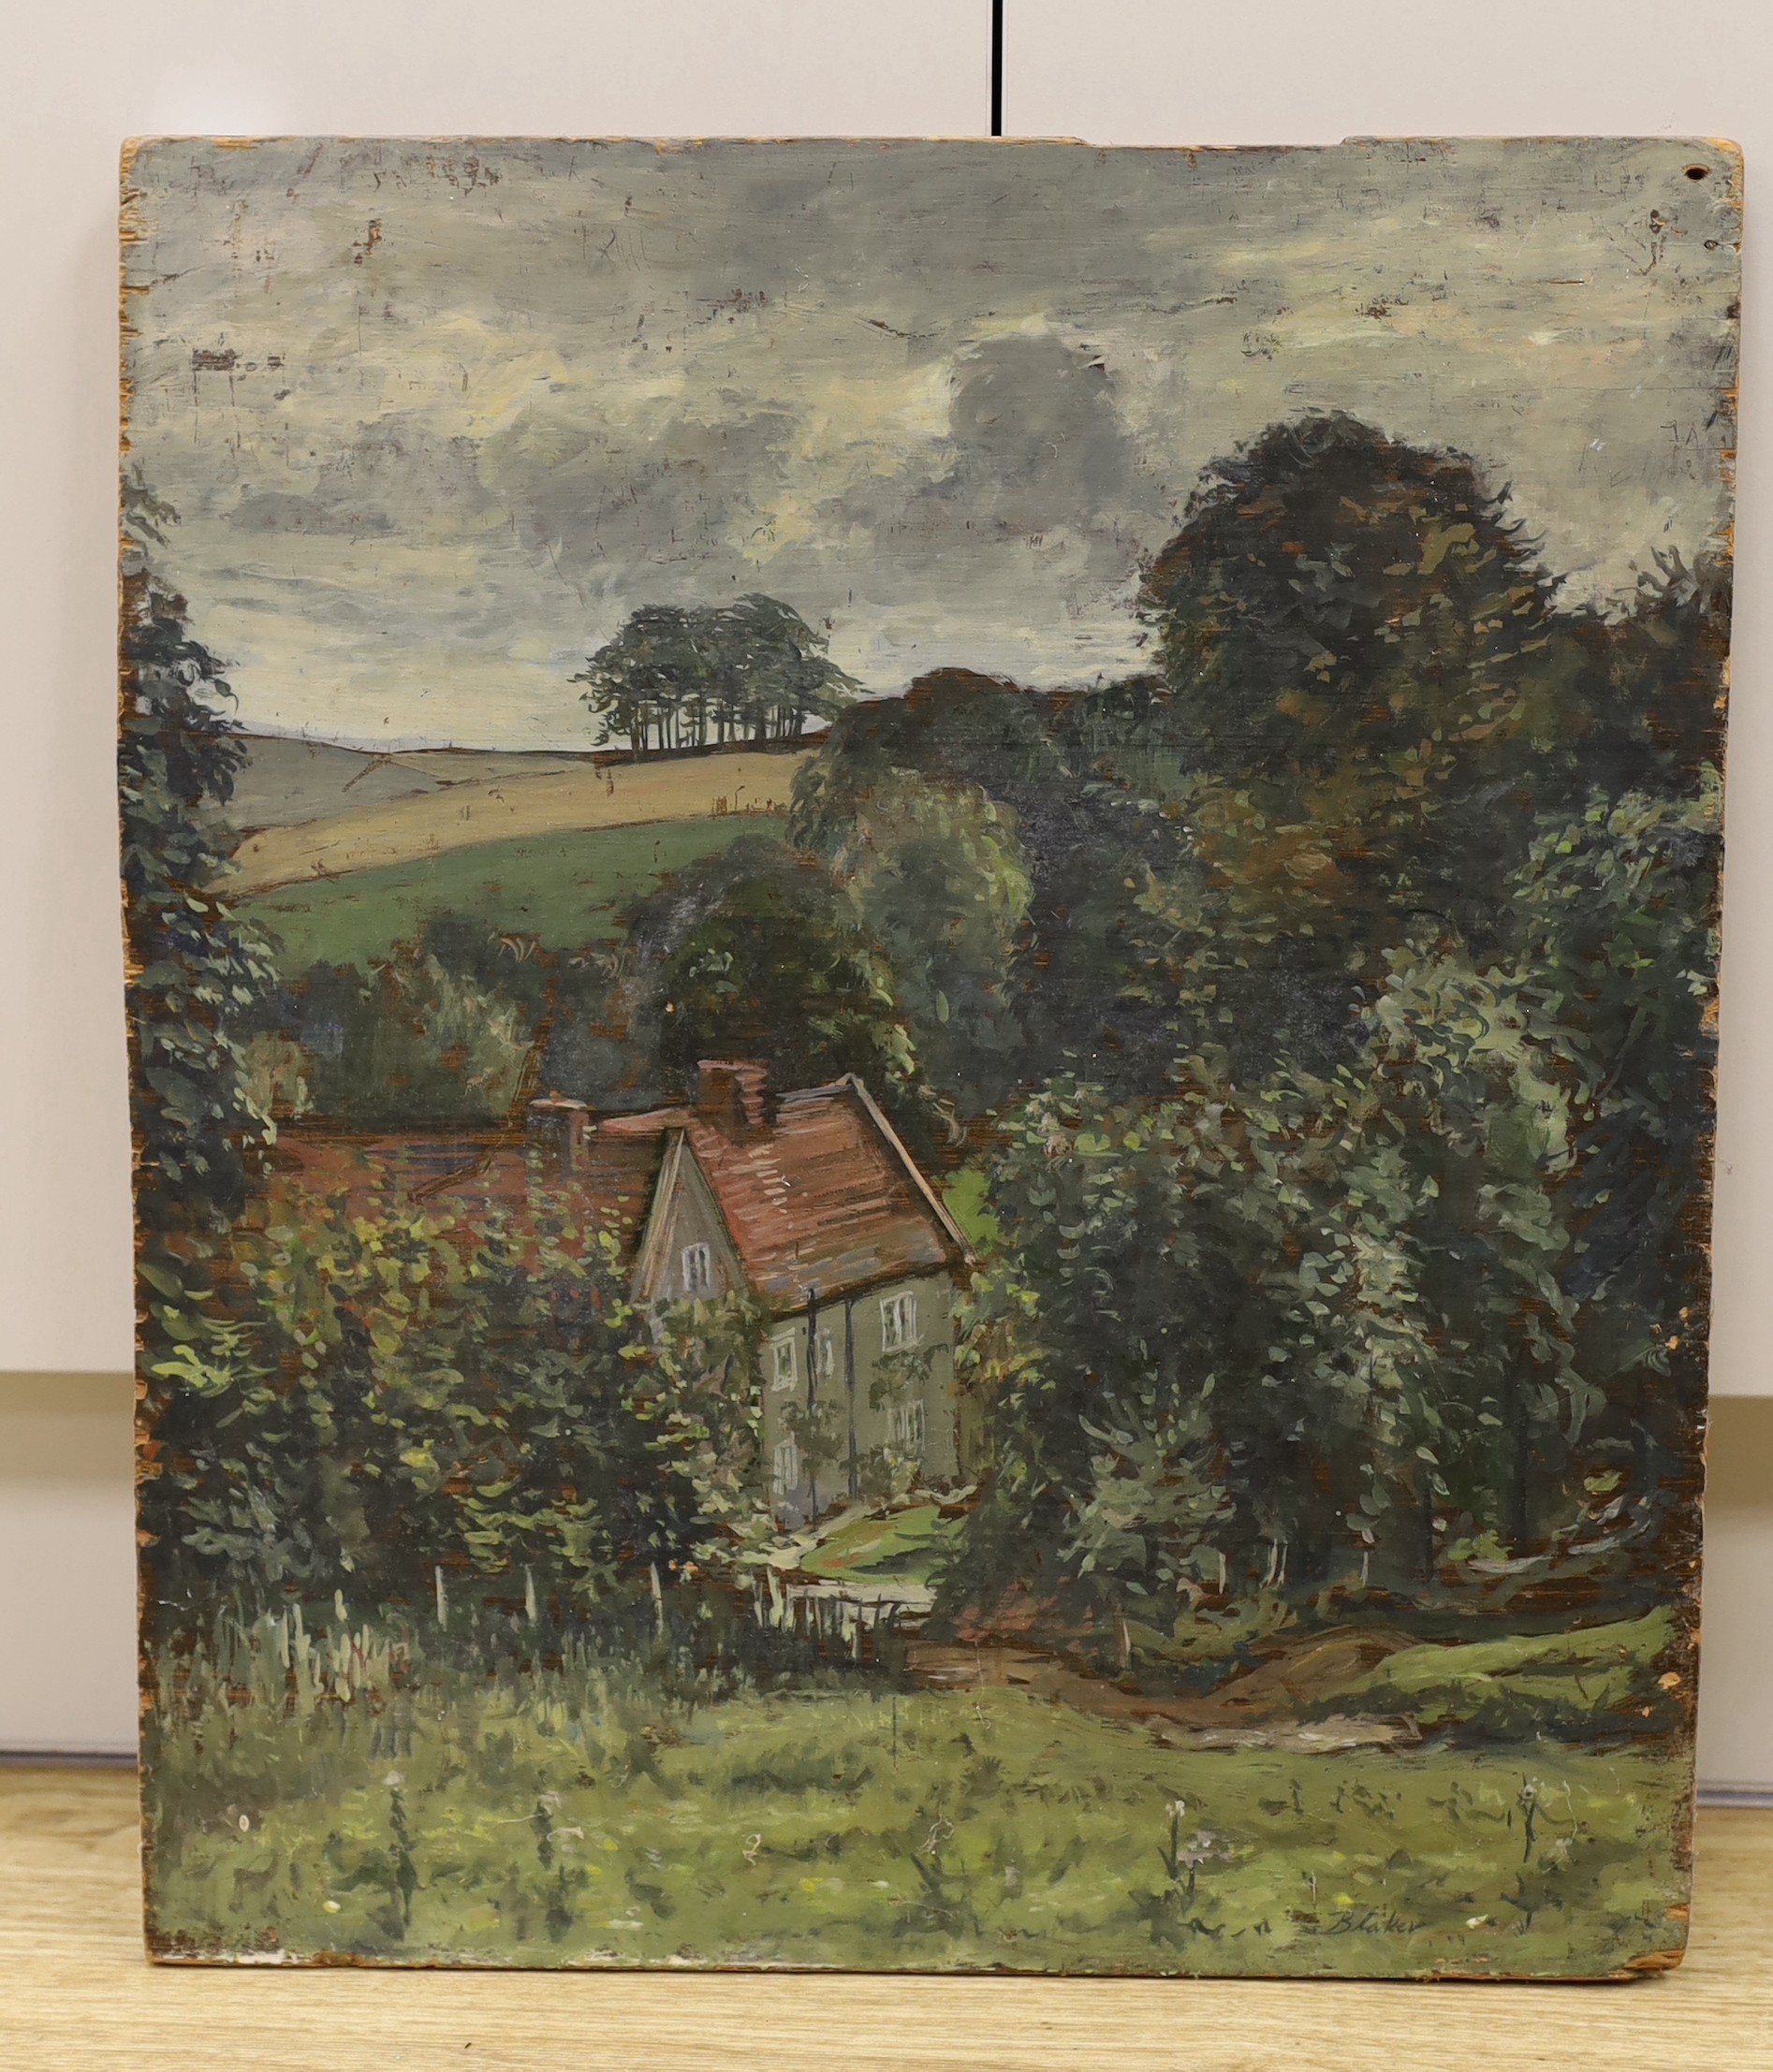 Michael Blaker (1928-2018), oil on wooden panel, House in a landscape, signed, 52 x 45cm, unframed